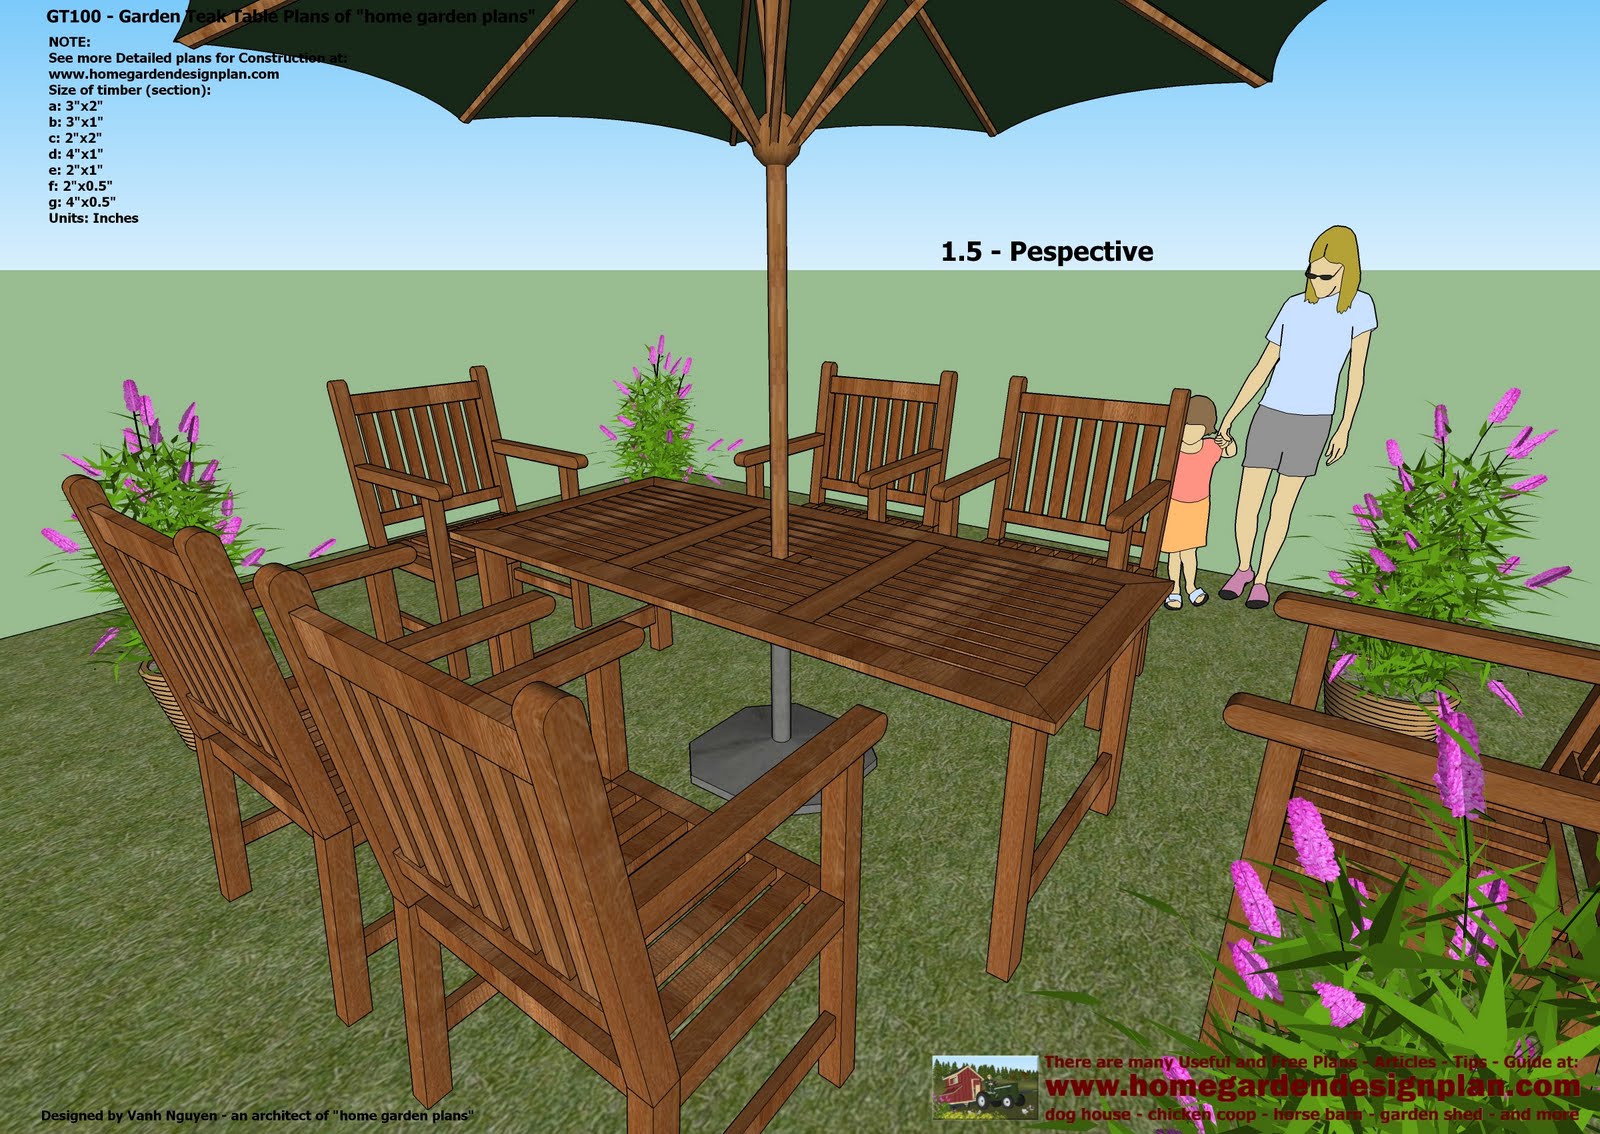 home garden plans: GT100 - Garden Teak Tables ...